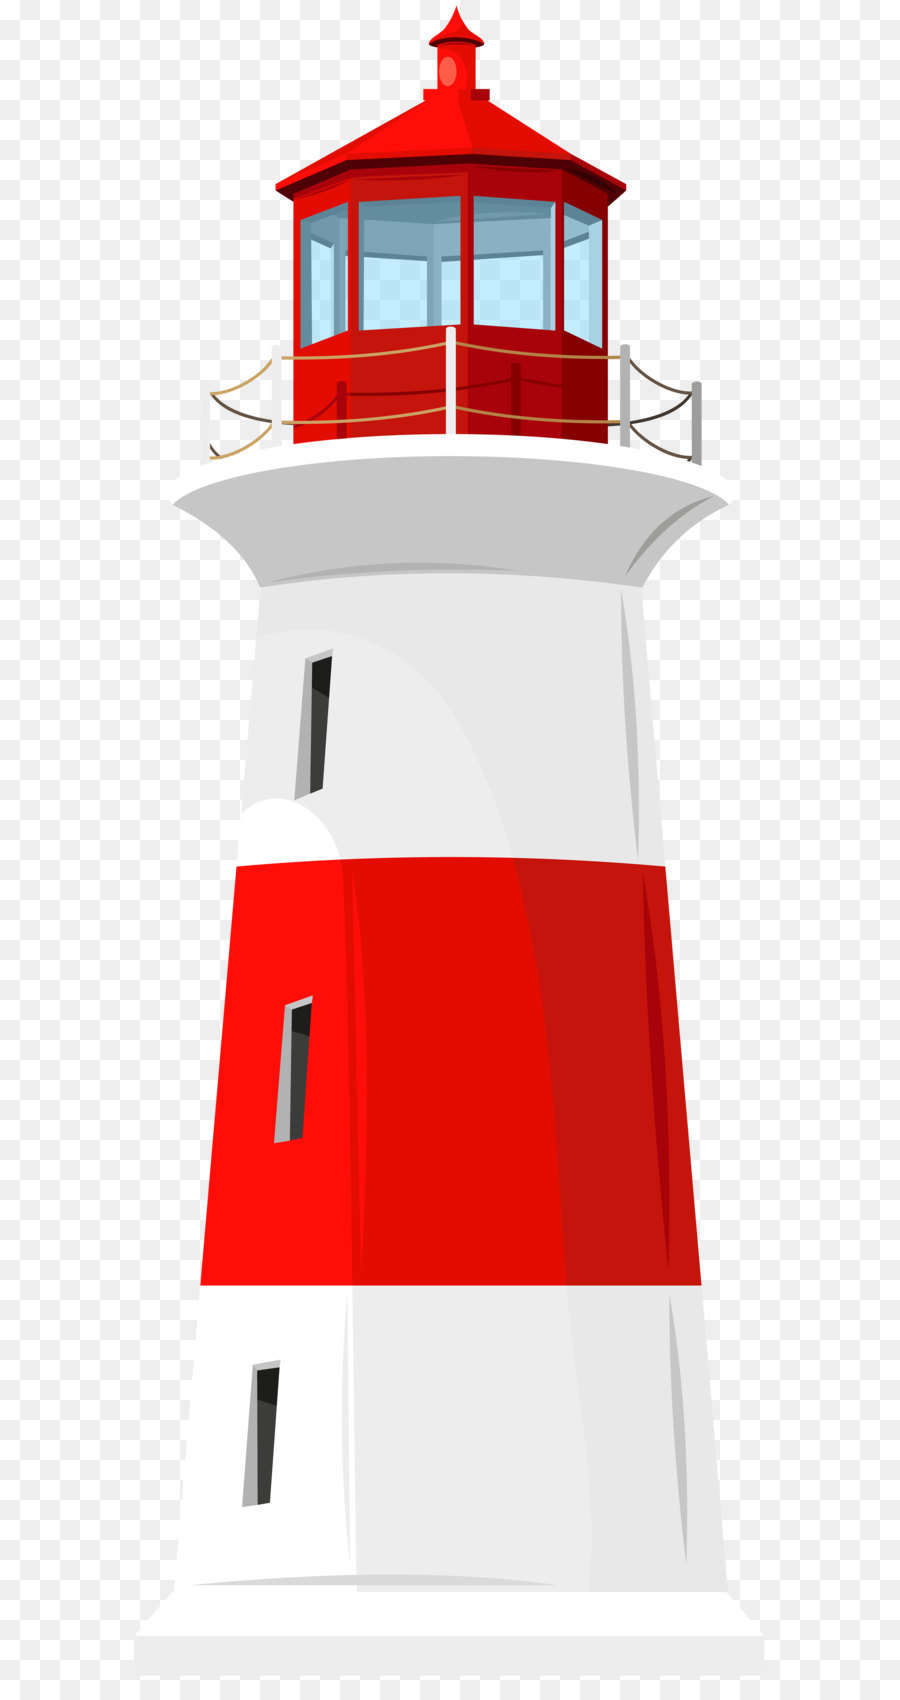 Lighthouse Clip art - Lighthouse Transparent PNG Clip Art Image png download - 3094*8000 - Free Transparent Christmasworld png Download.